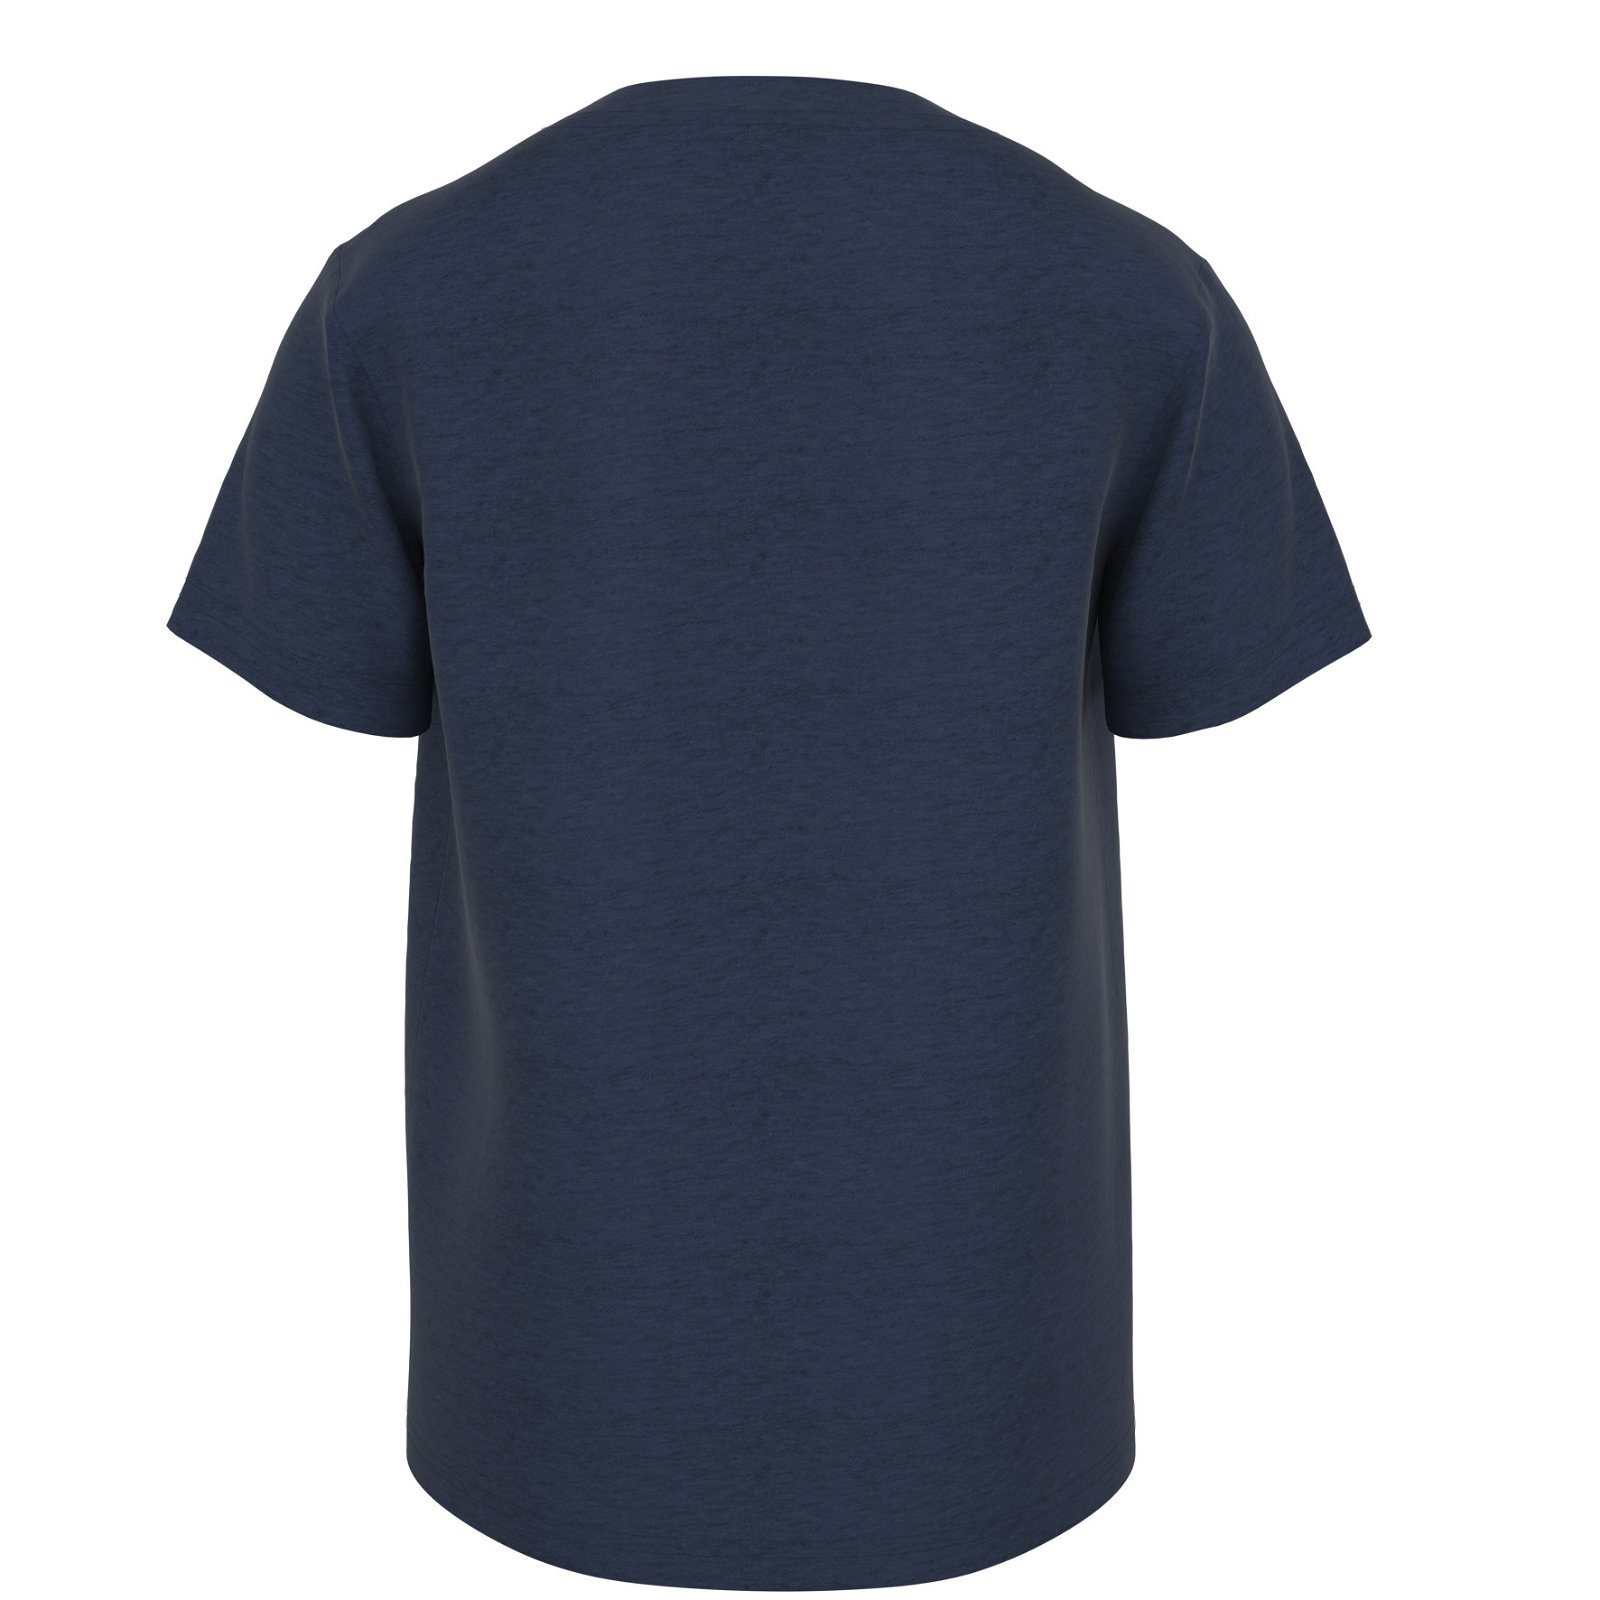 Lupilu T-shirt Blu navy 3A sconto 78% MODA BAMBINI Camicie & T-shirt Basic 